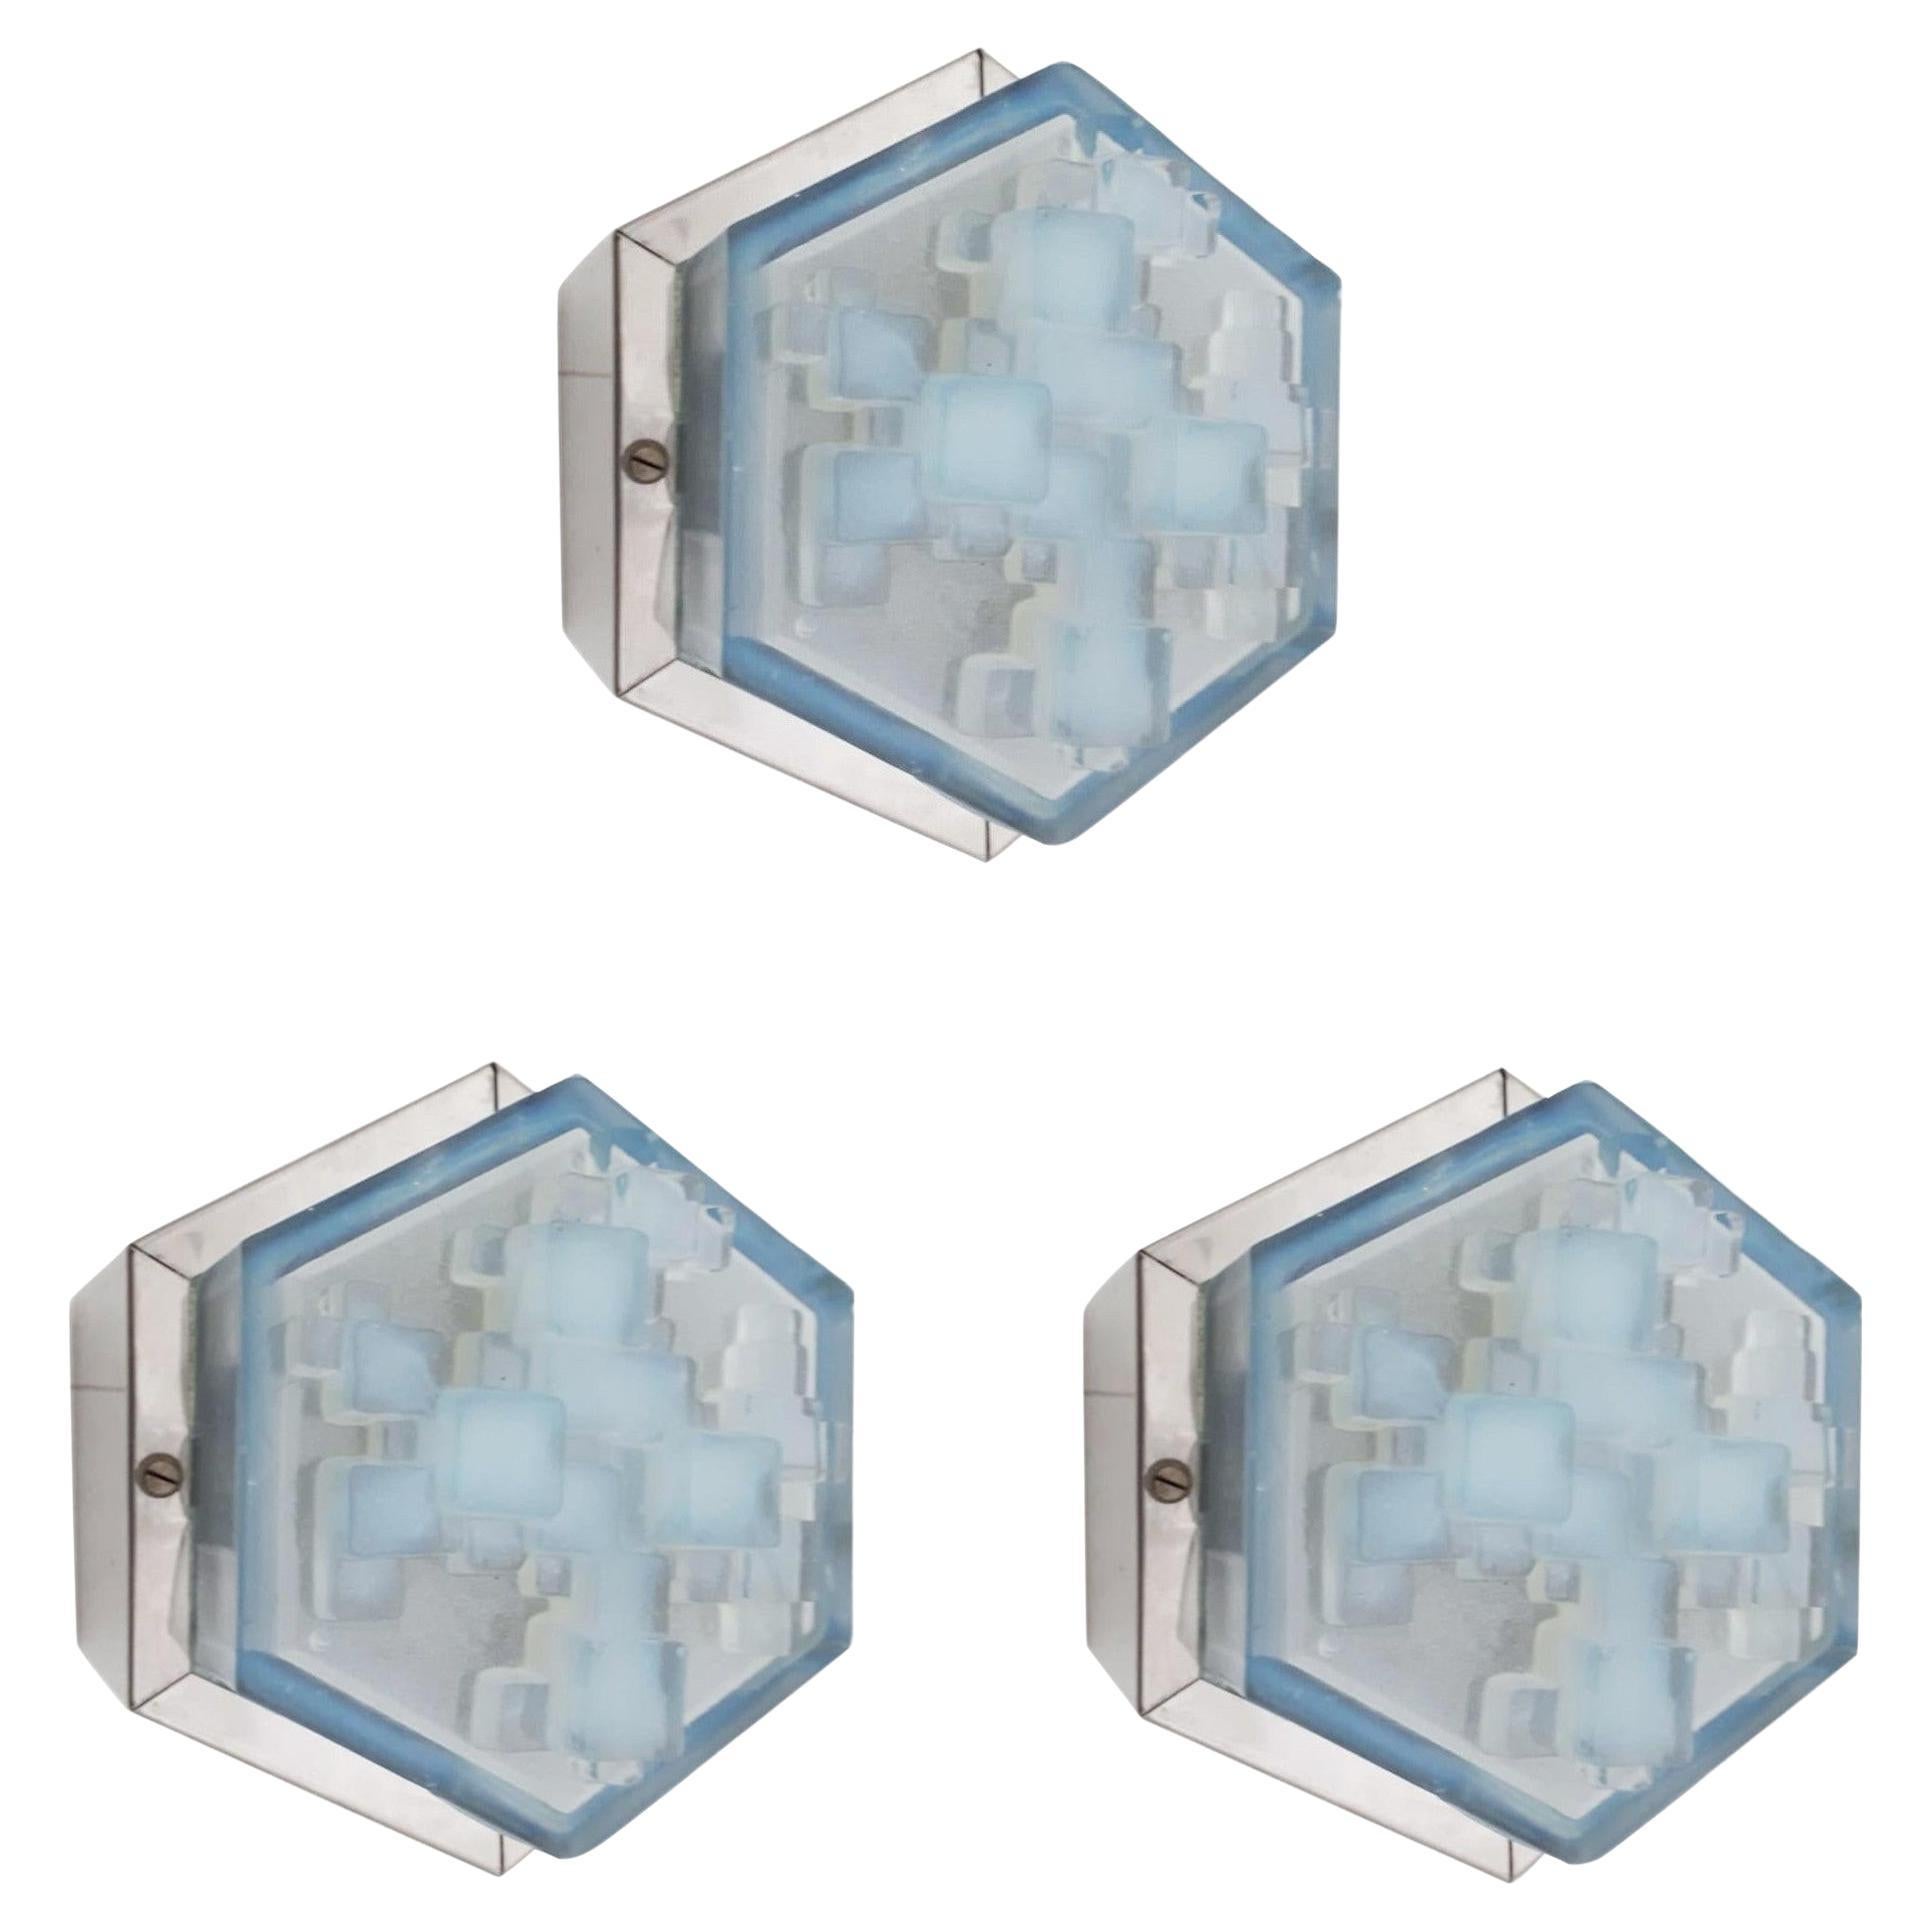 Hexagonal Modular Sconces / Flush Mounts by Poliarte - 3 available